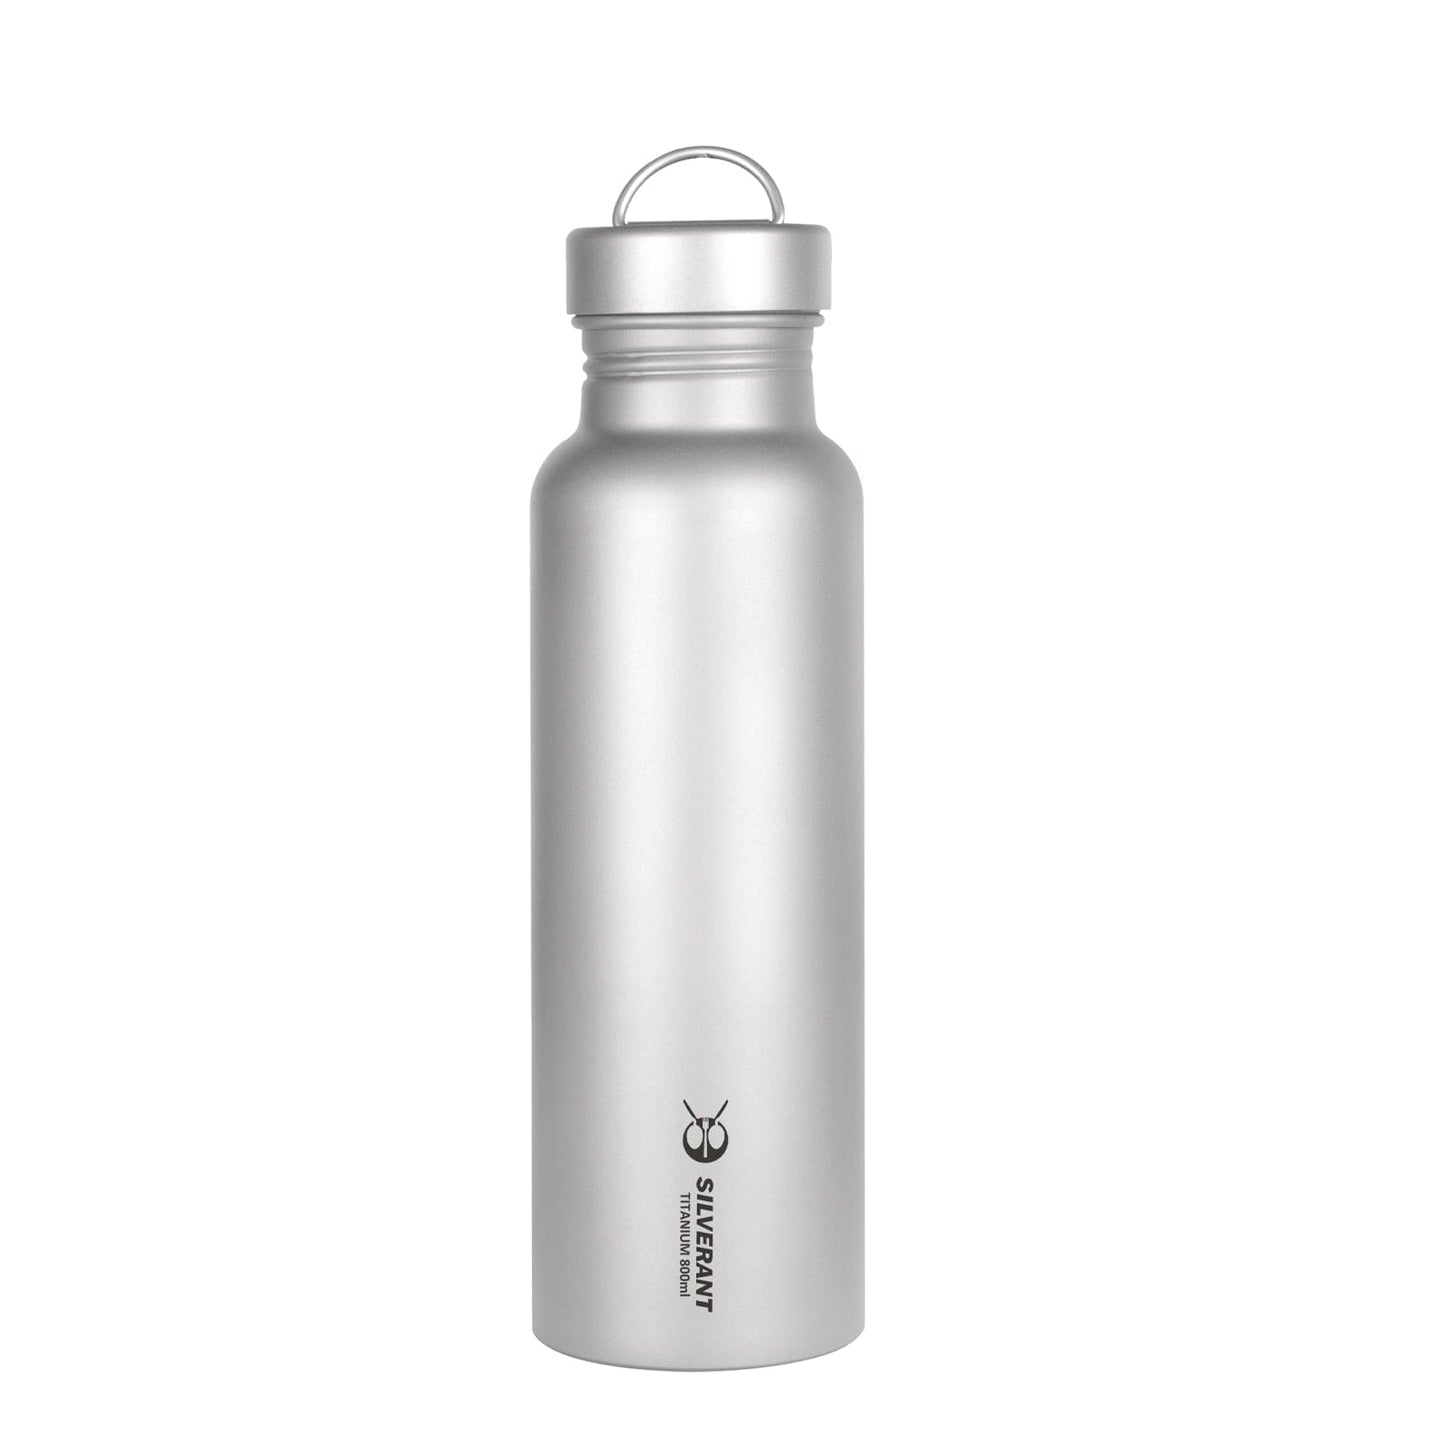 Titanium Water Bottle 800ml/28.1 fl oz - SilverAnt Outdoors